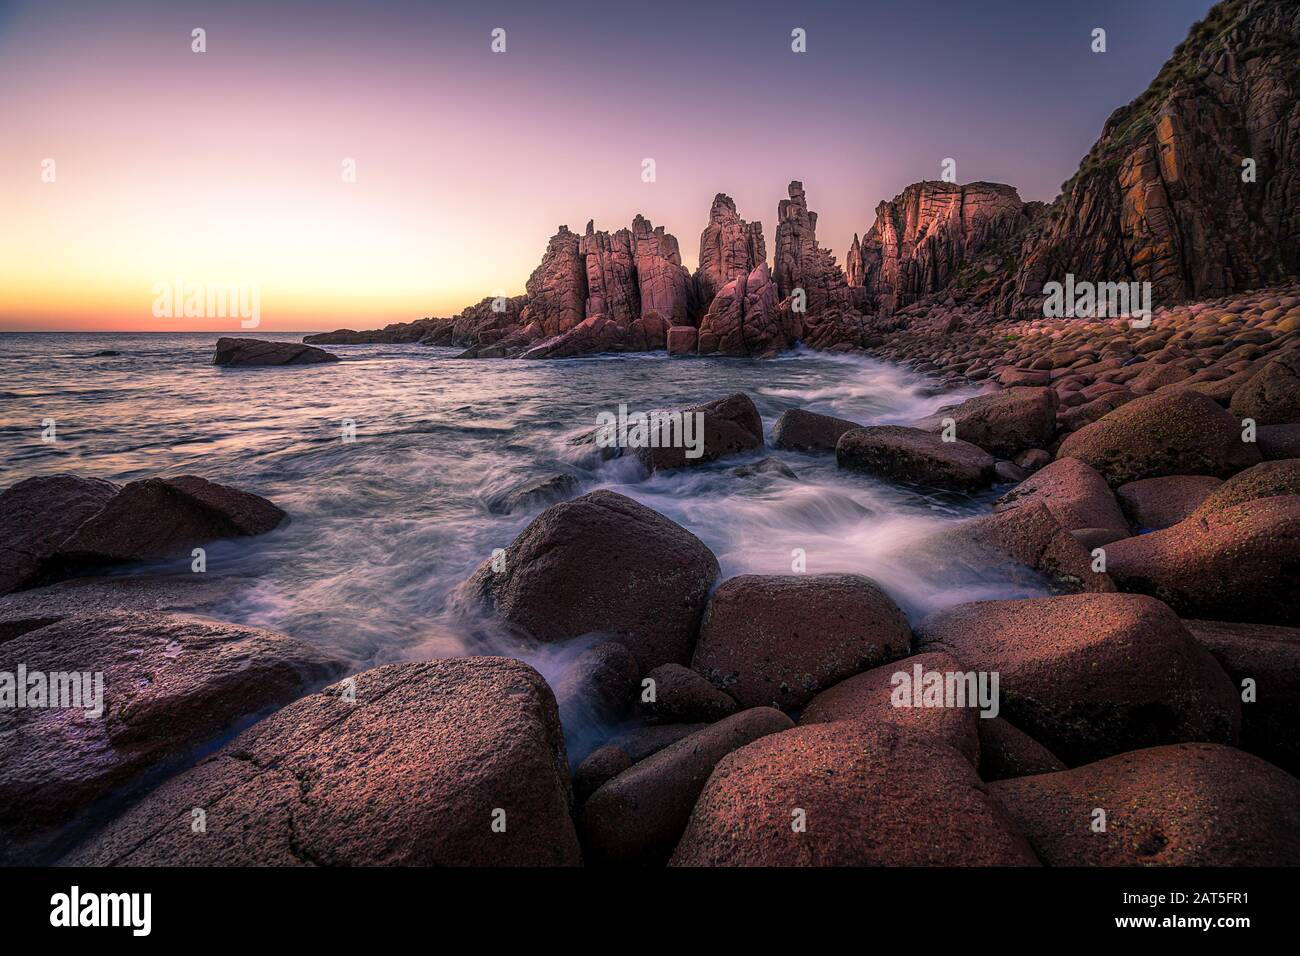 Morning view of the Pinnacles at Cape Woolamai, Australia Stock Photo